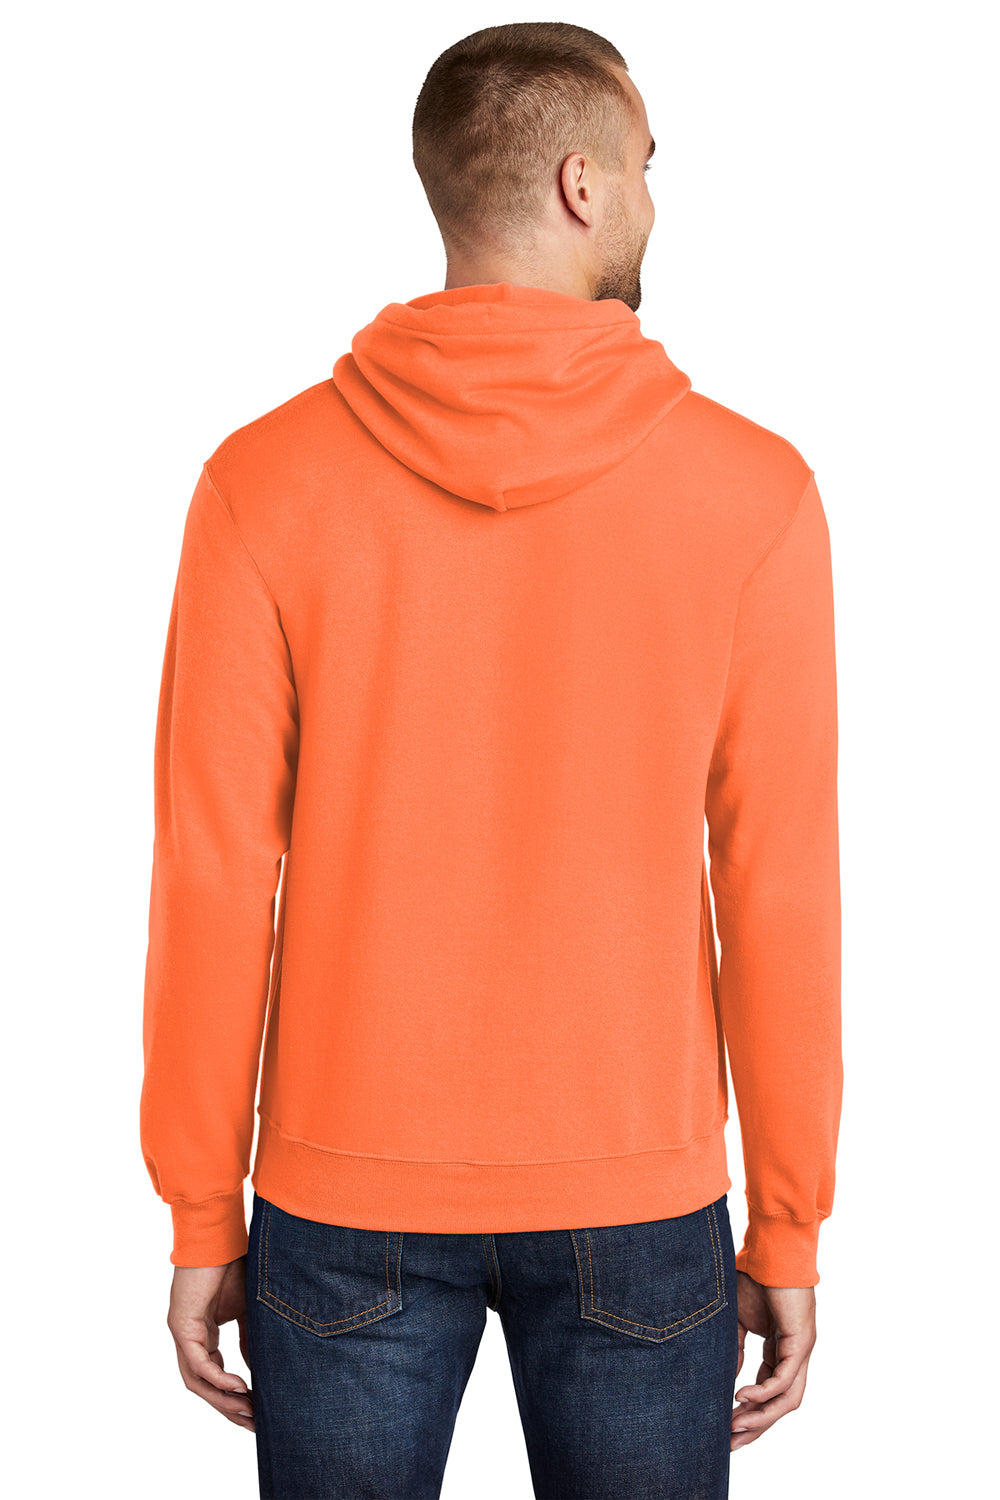 Port & Company PC78H Mens Core Fleece Hooded Sweatshirt Hoodie Neon Orange Back